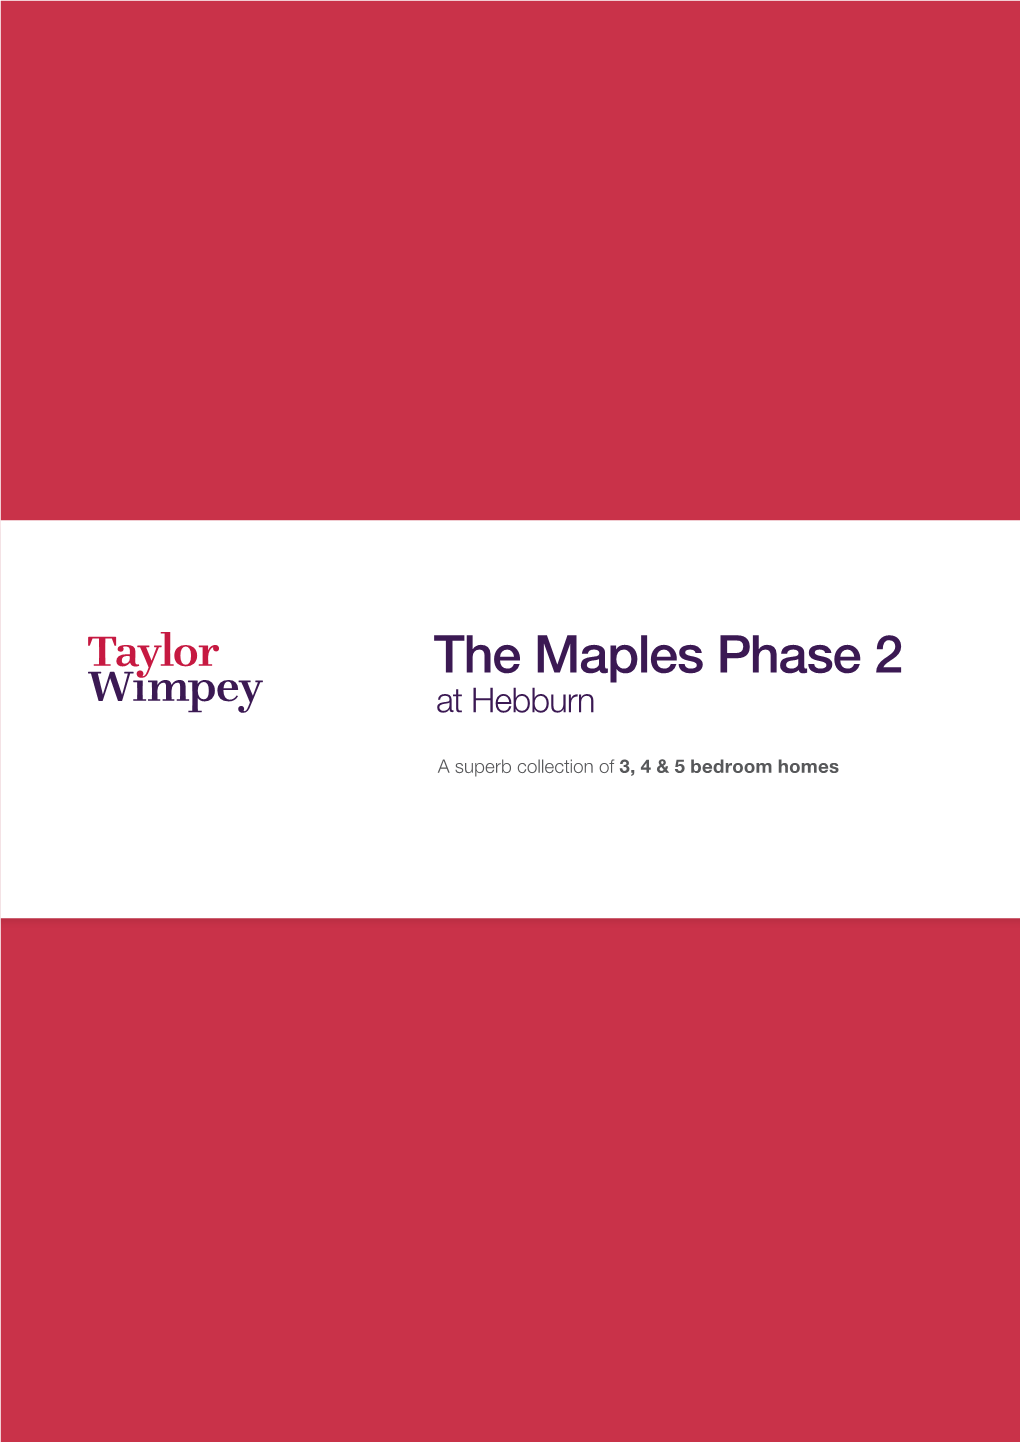 The Maples Phase 2 at Hebburn